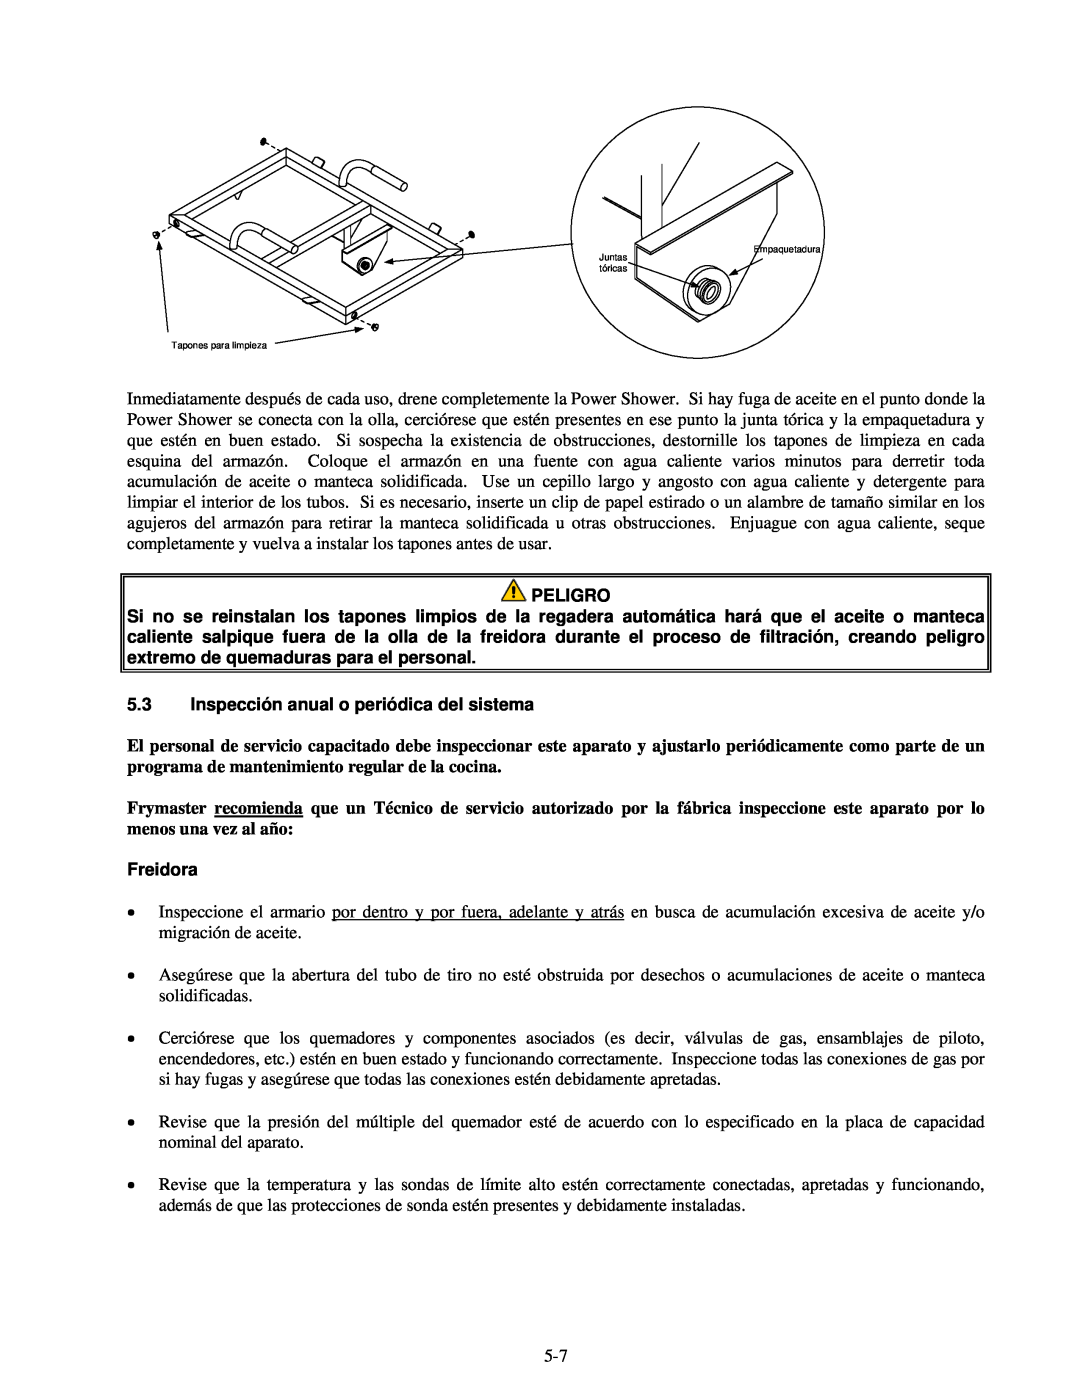 Frymaster H55 manual 5.3Inspección anual o periódica del sistema, Freidora, Peligro 